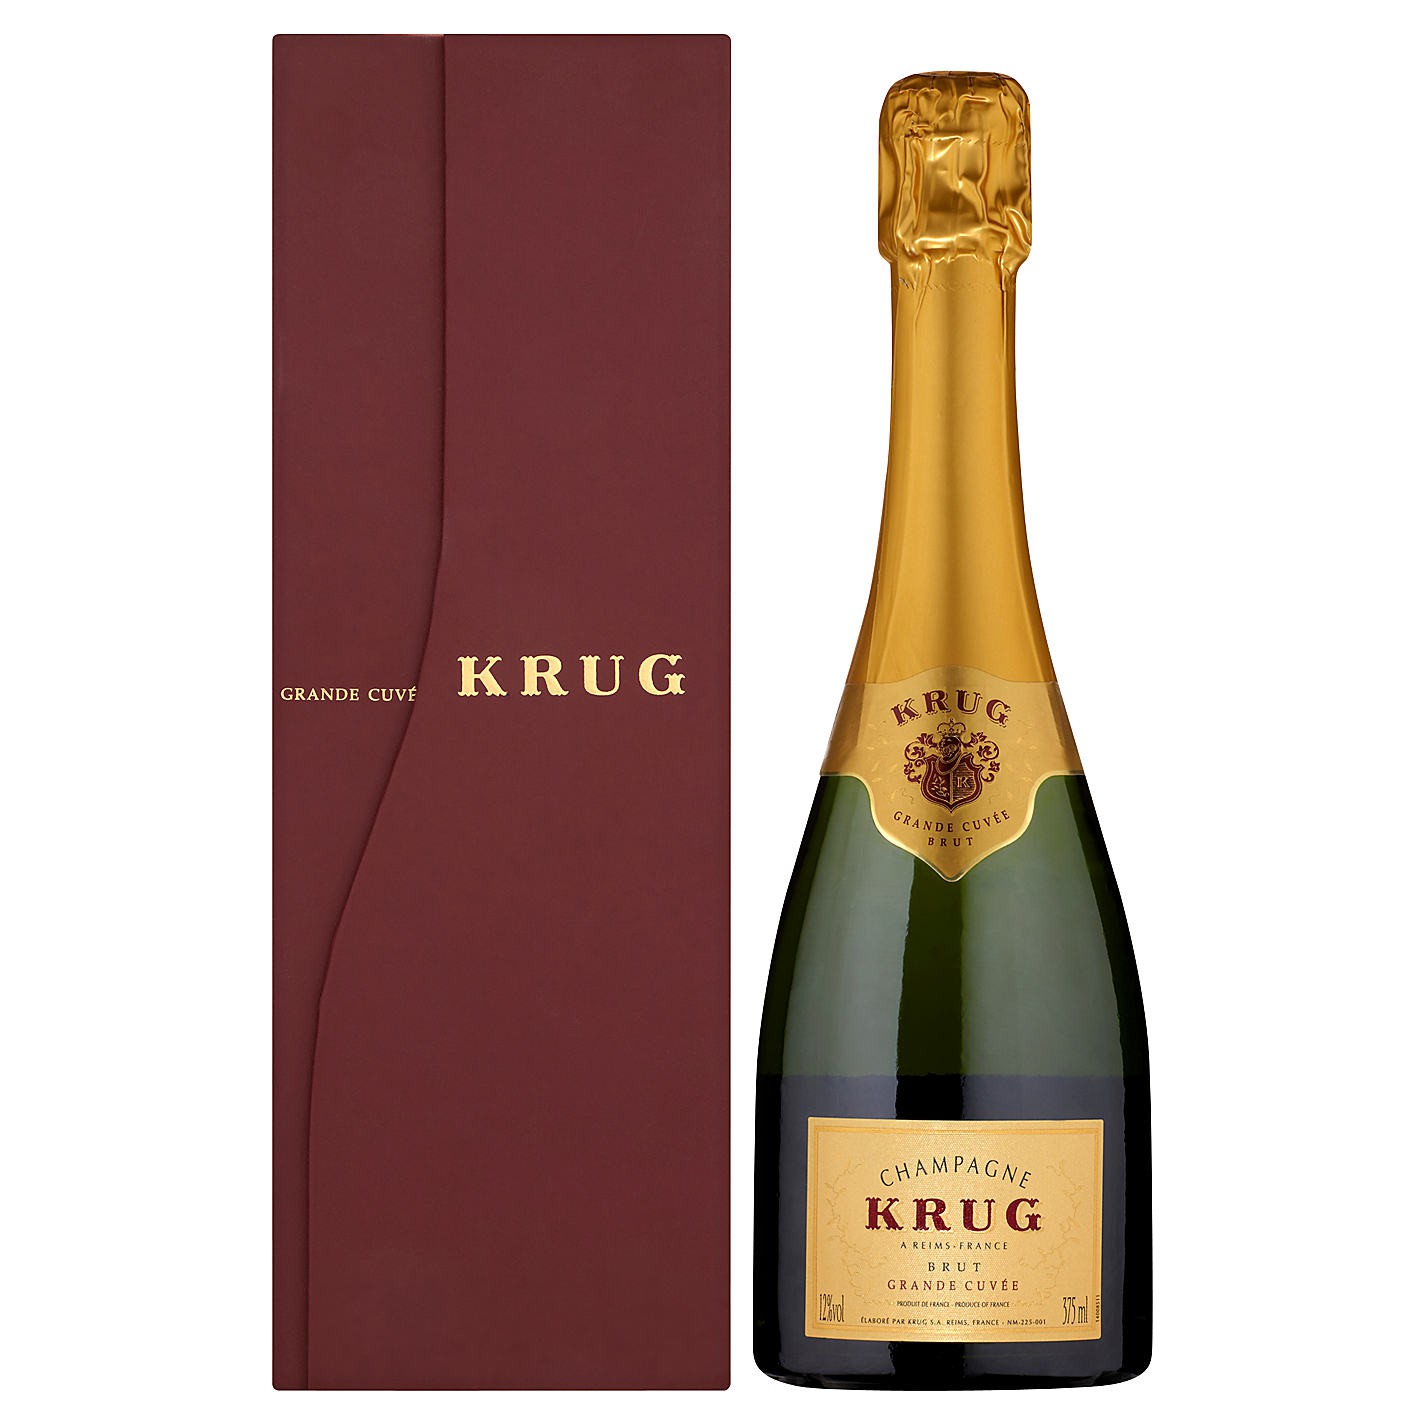 KRUG Champagne: an exclusive evening – Antica Corte Pallavicina